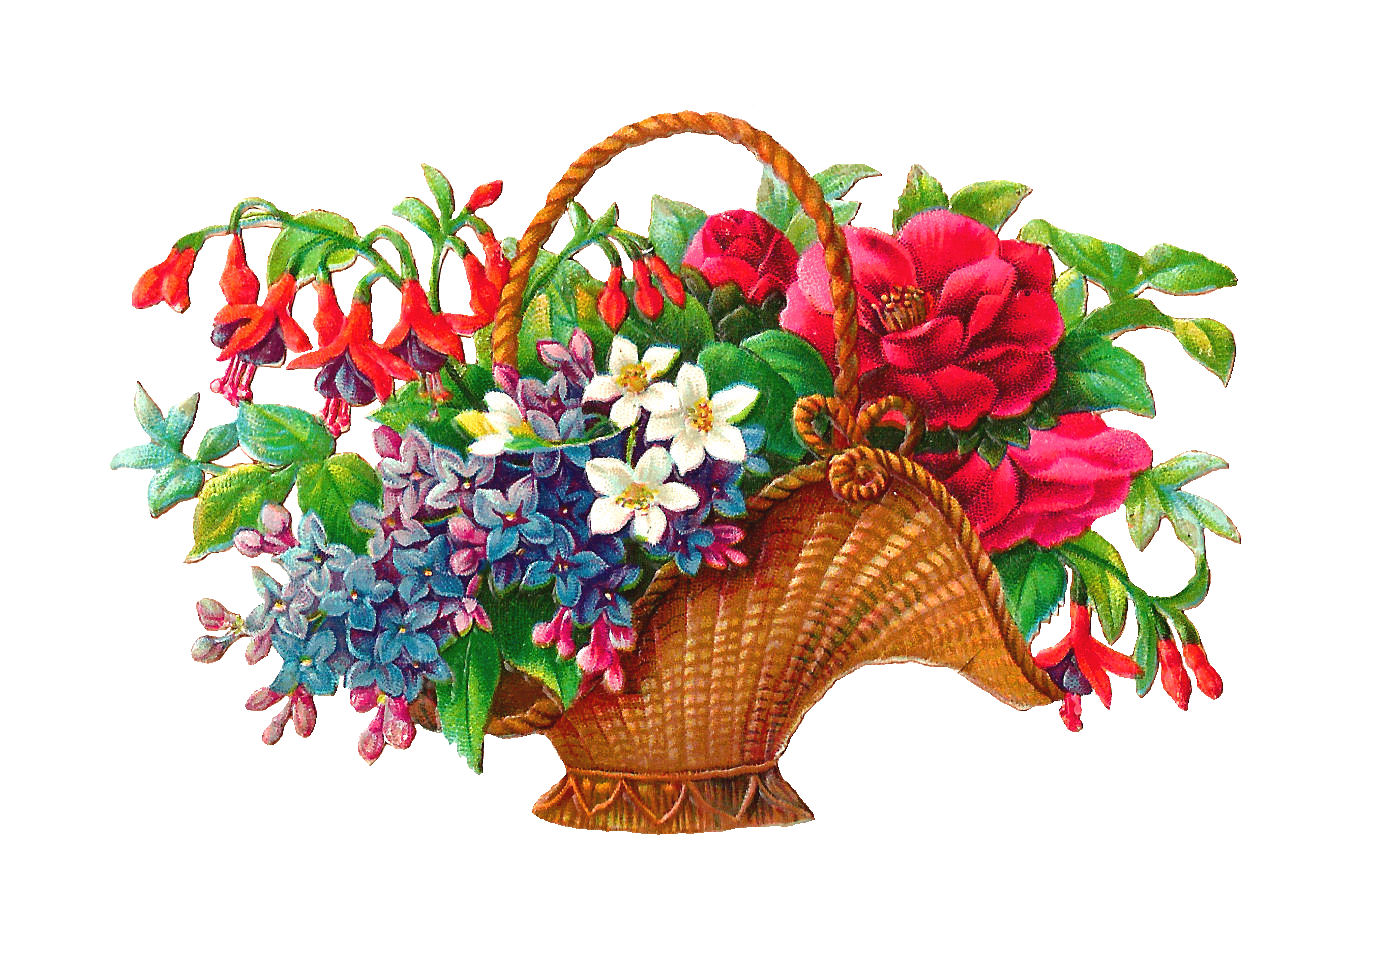 Antique Images: Free Flower Basket Clip Art: 2 Wicket Baskets Full ...